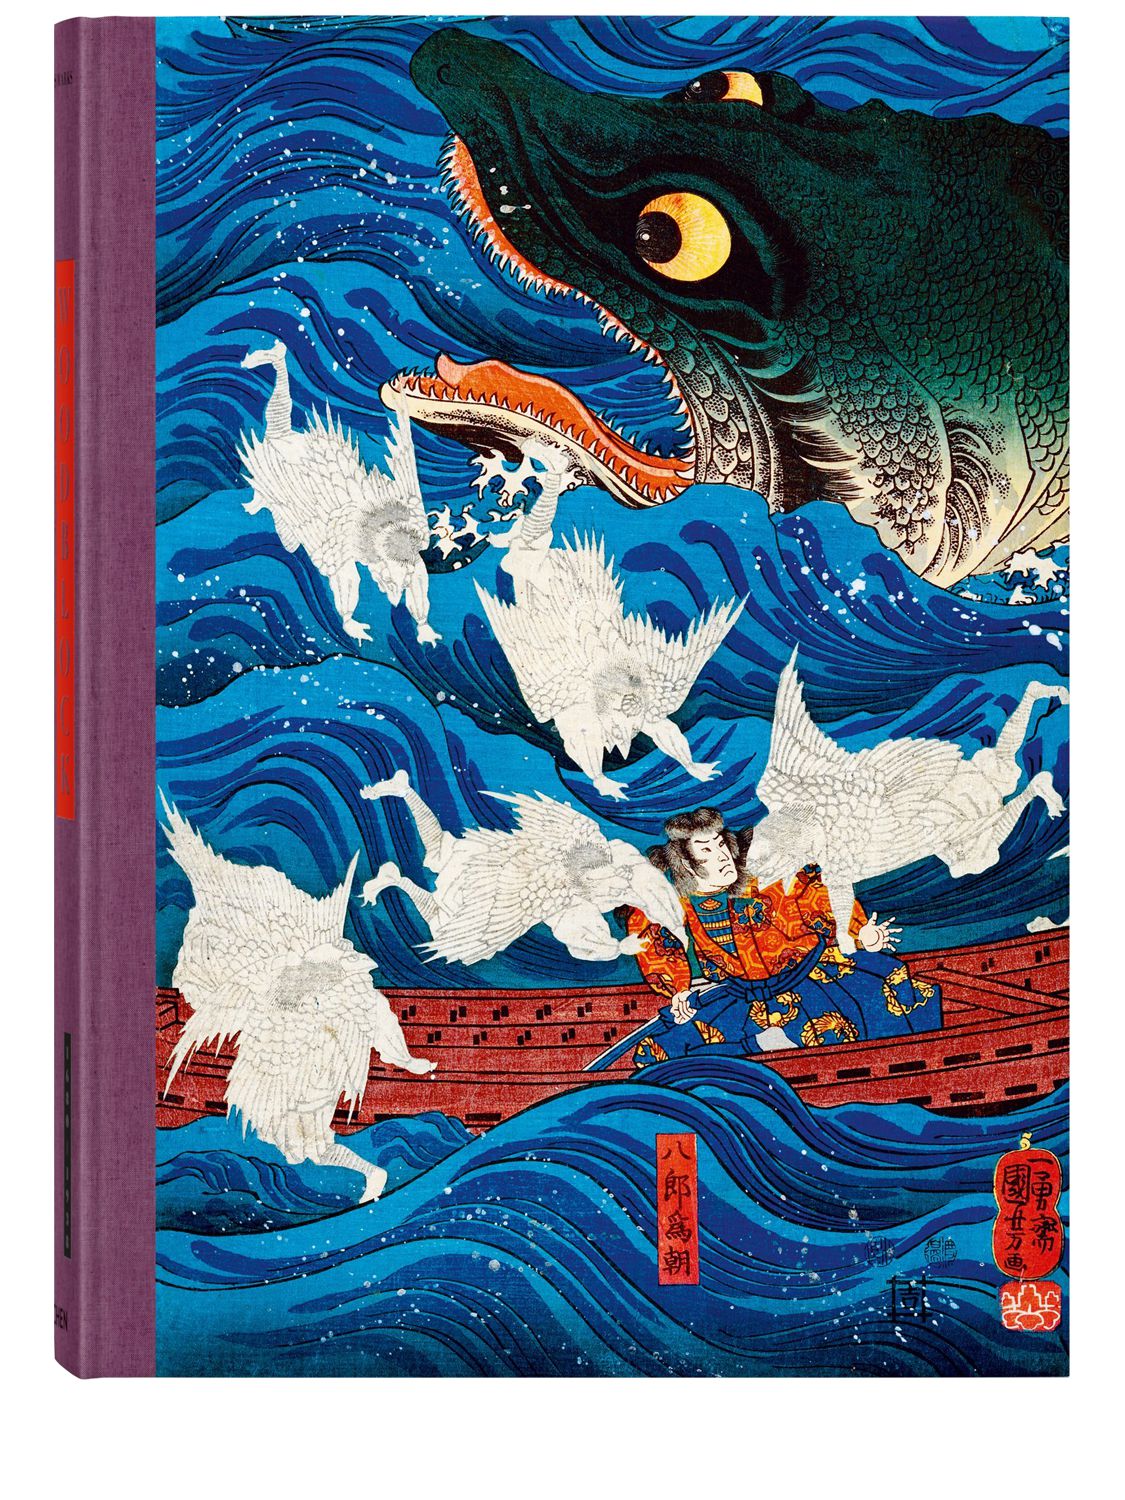 Taschen Japanese Woodblock Prints 书 In Multicolor